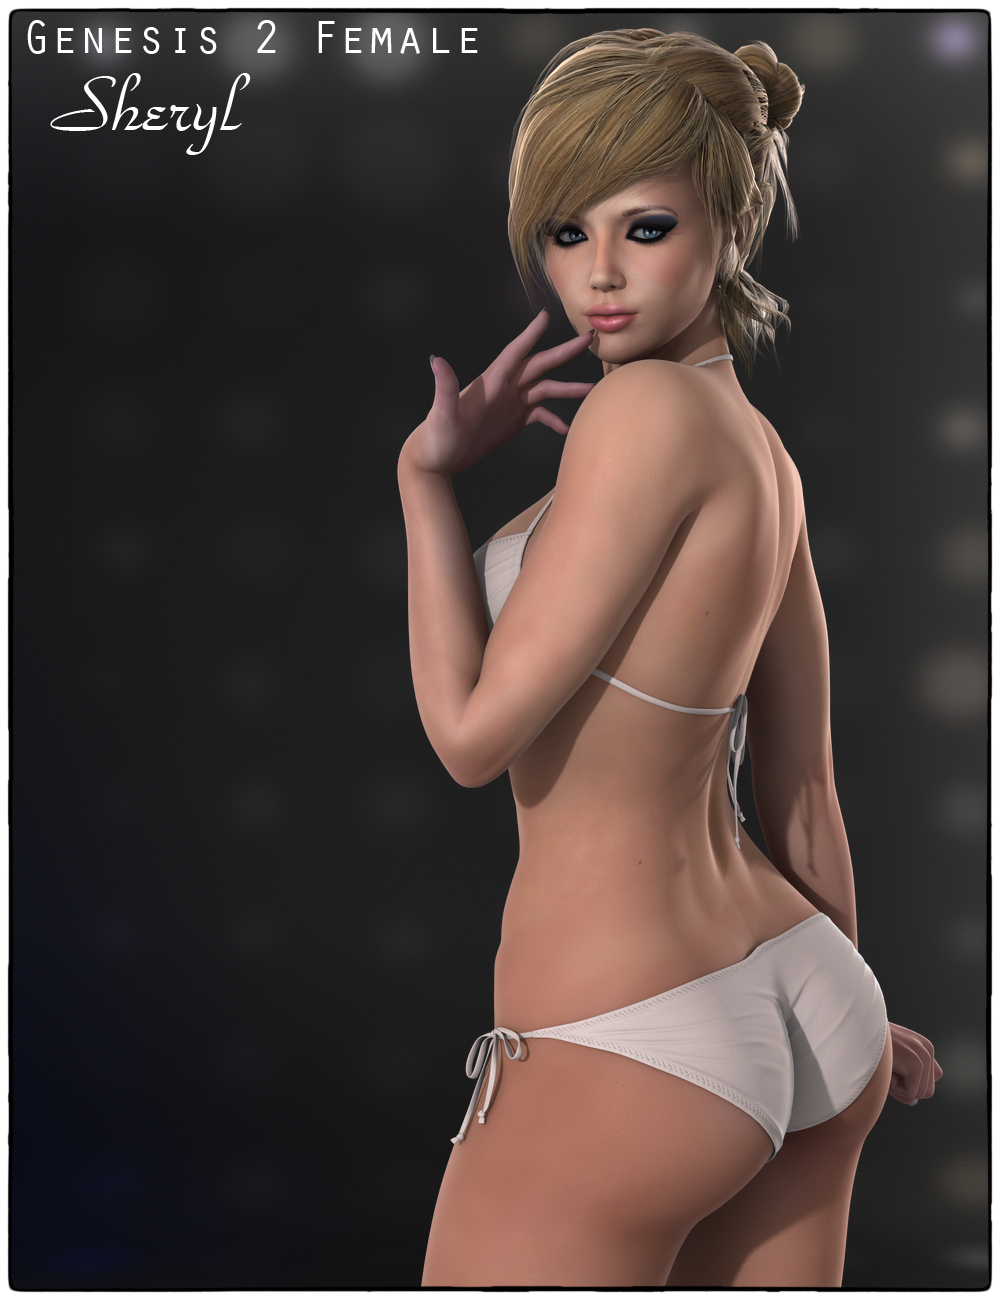 Sheryl for Genesis 2 Female(s) by: Digital Touch, 3D Models by Daz 3D